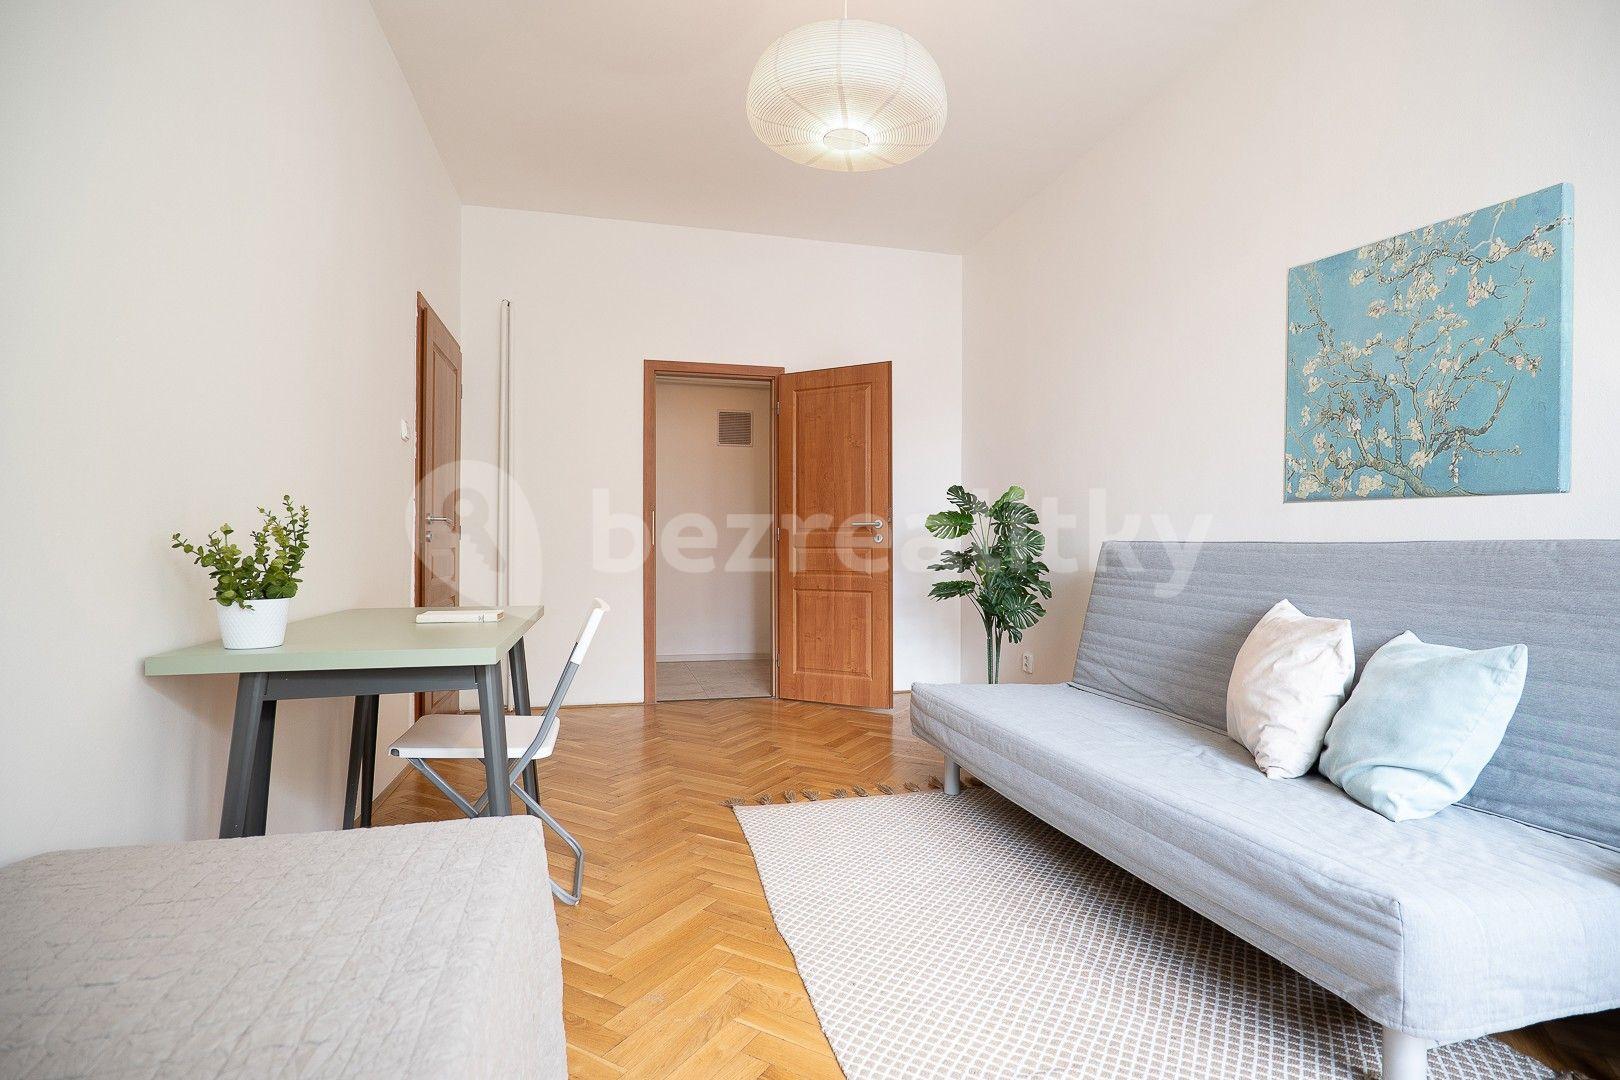 2 bedroom with open-plan kitchen flat for sale, 75 m², Šlikova, Prague, Prague